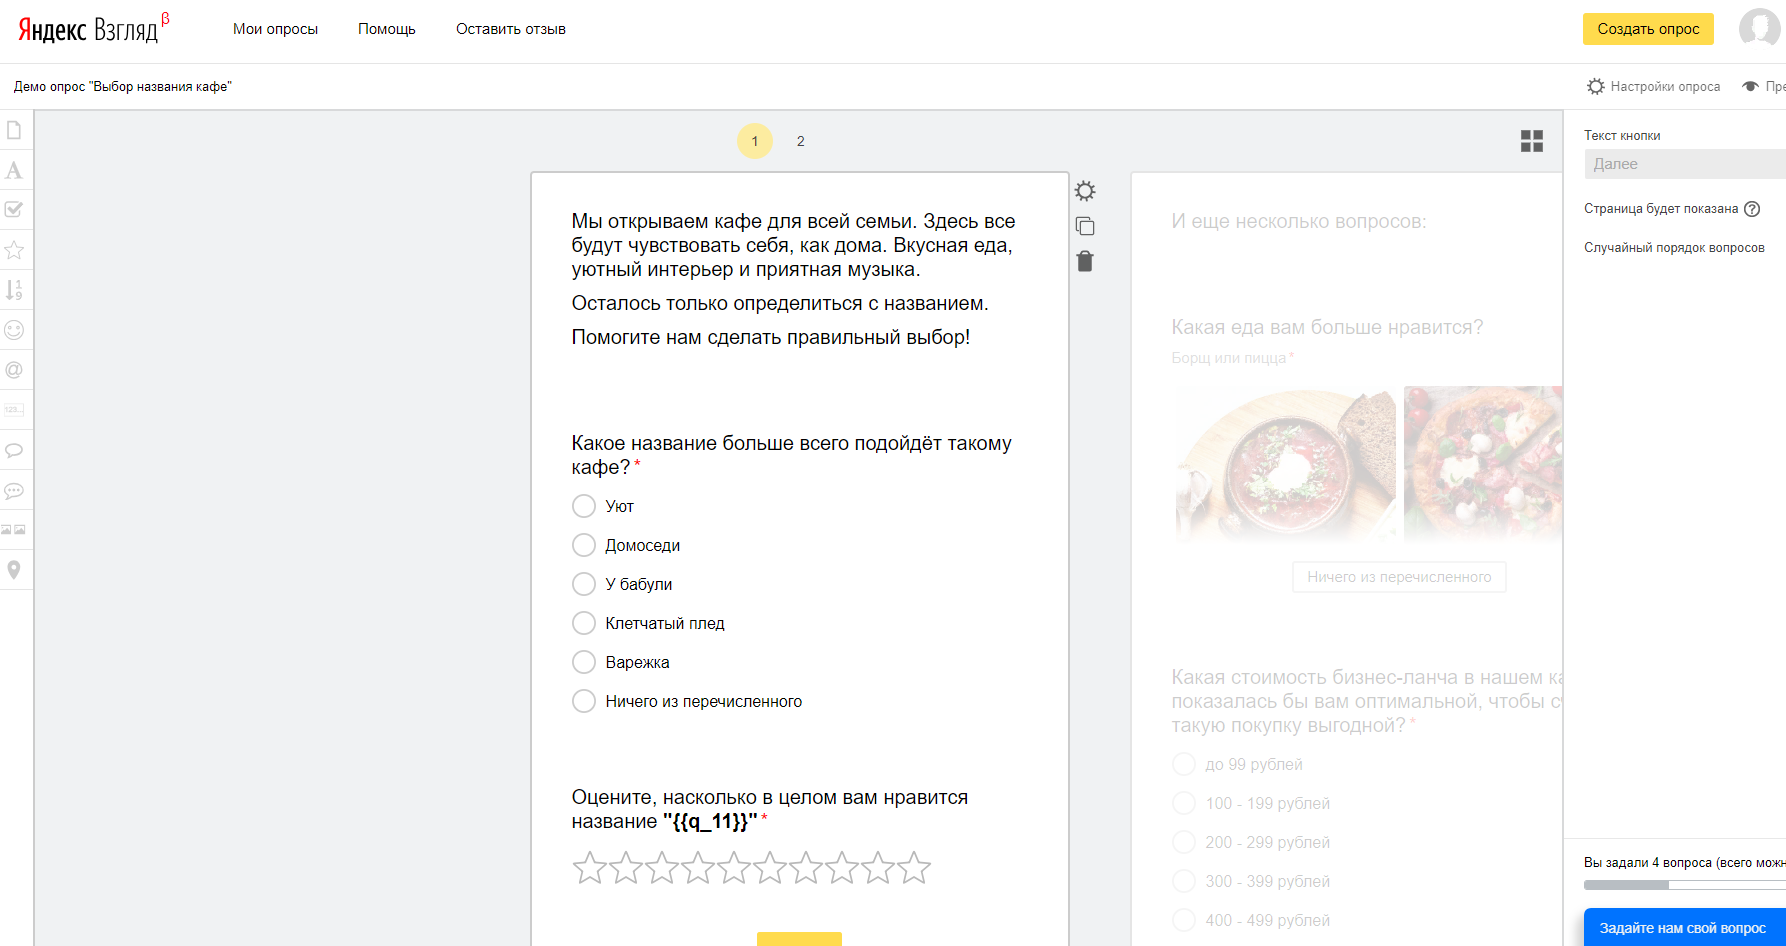 Пример демоопроса в Яндекс.Взгляде